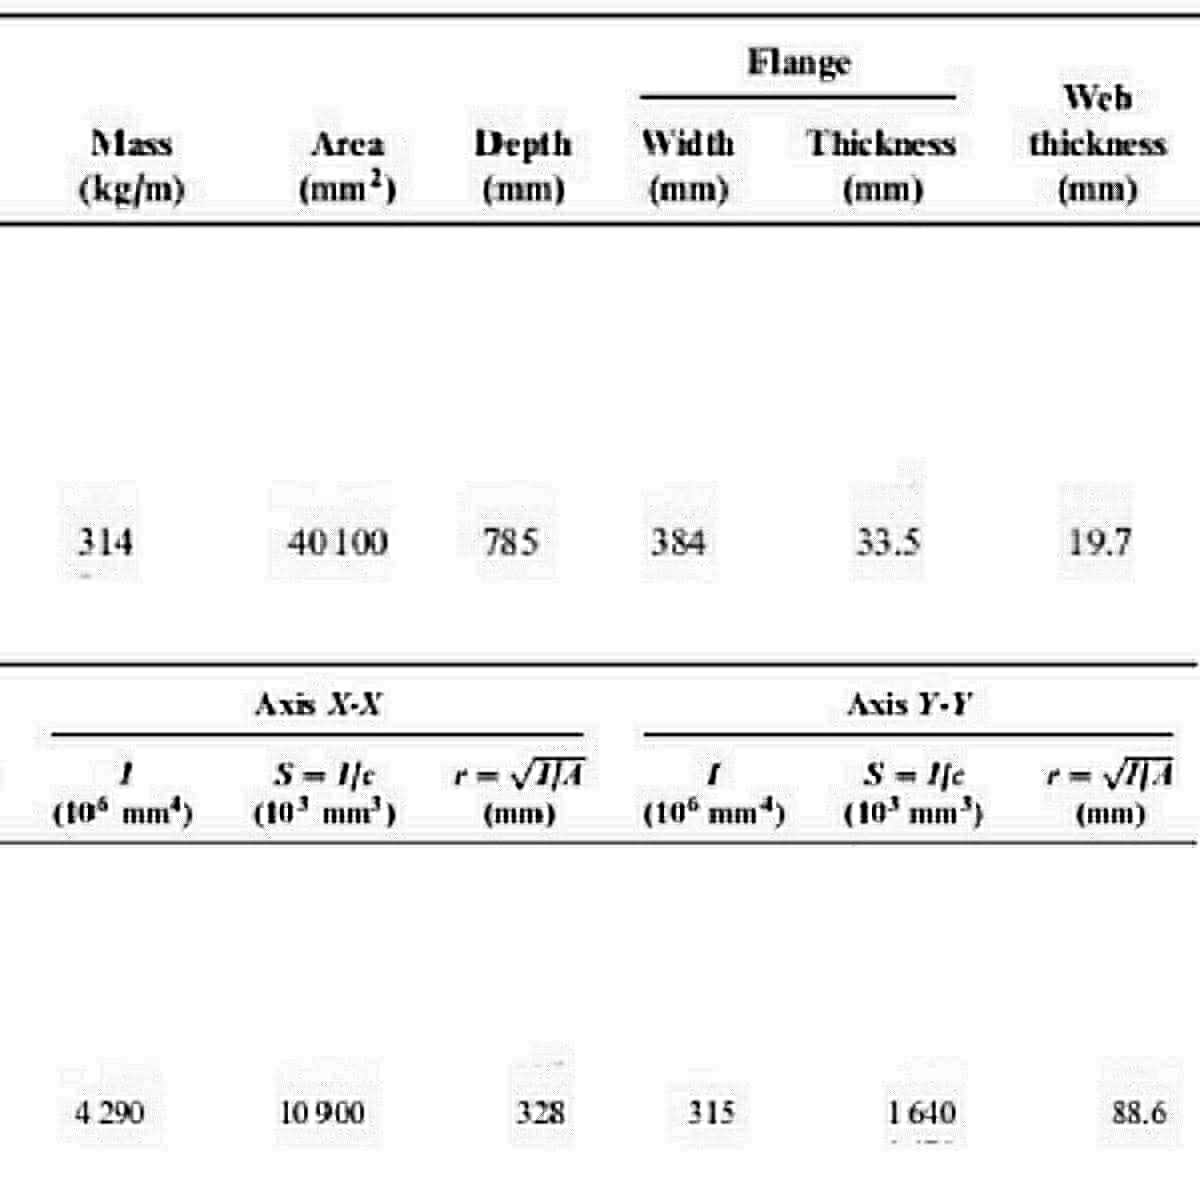 Flange
Web
Mass
Depth
(mm)
Area
Thickness
thickness
(kg/m)
(mm²)
(mm)
(mm)
(mm)
314
40100
785
384
33.5
19.7
Axis X-X
Axis Y-Y
S = 1/c
(10' mm')
S= lfe
(10' mm')
r= VIJA
(to mm)
(тm)
(10 mm)
(mm)
4 290
10 900
328
315
1 640
88.6
